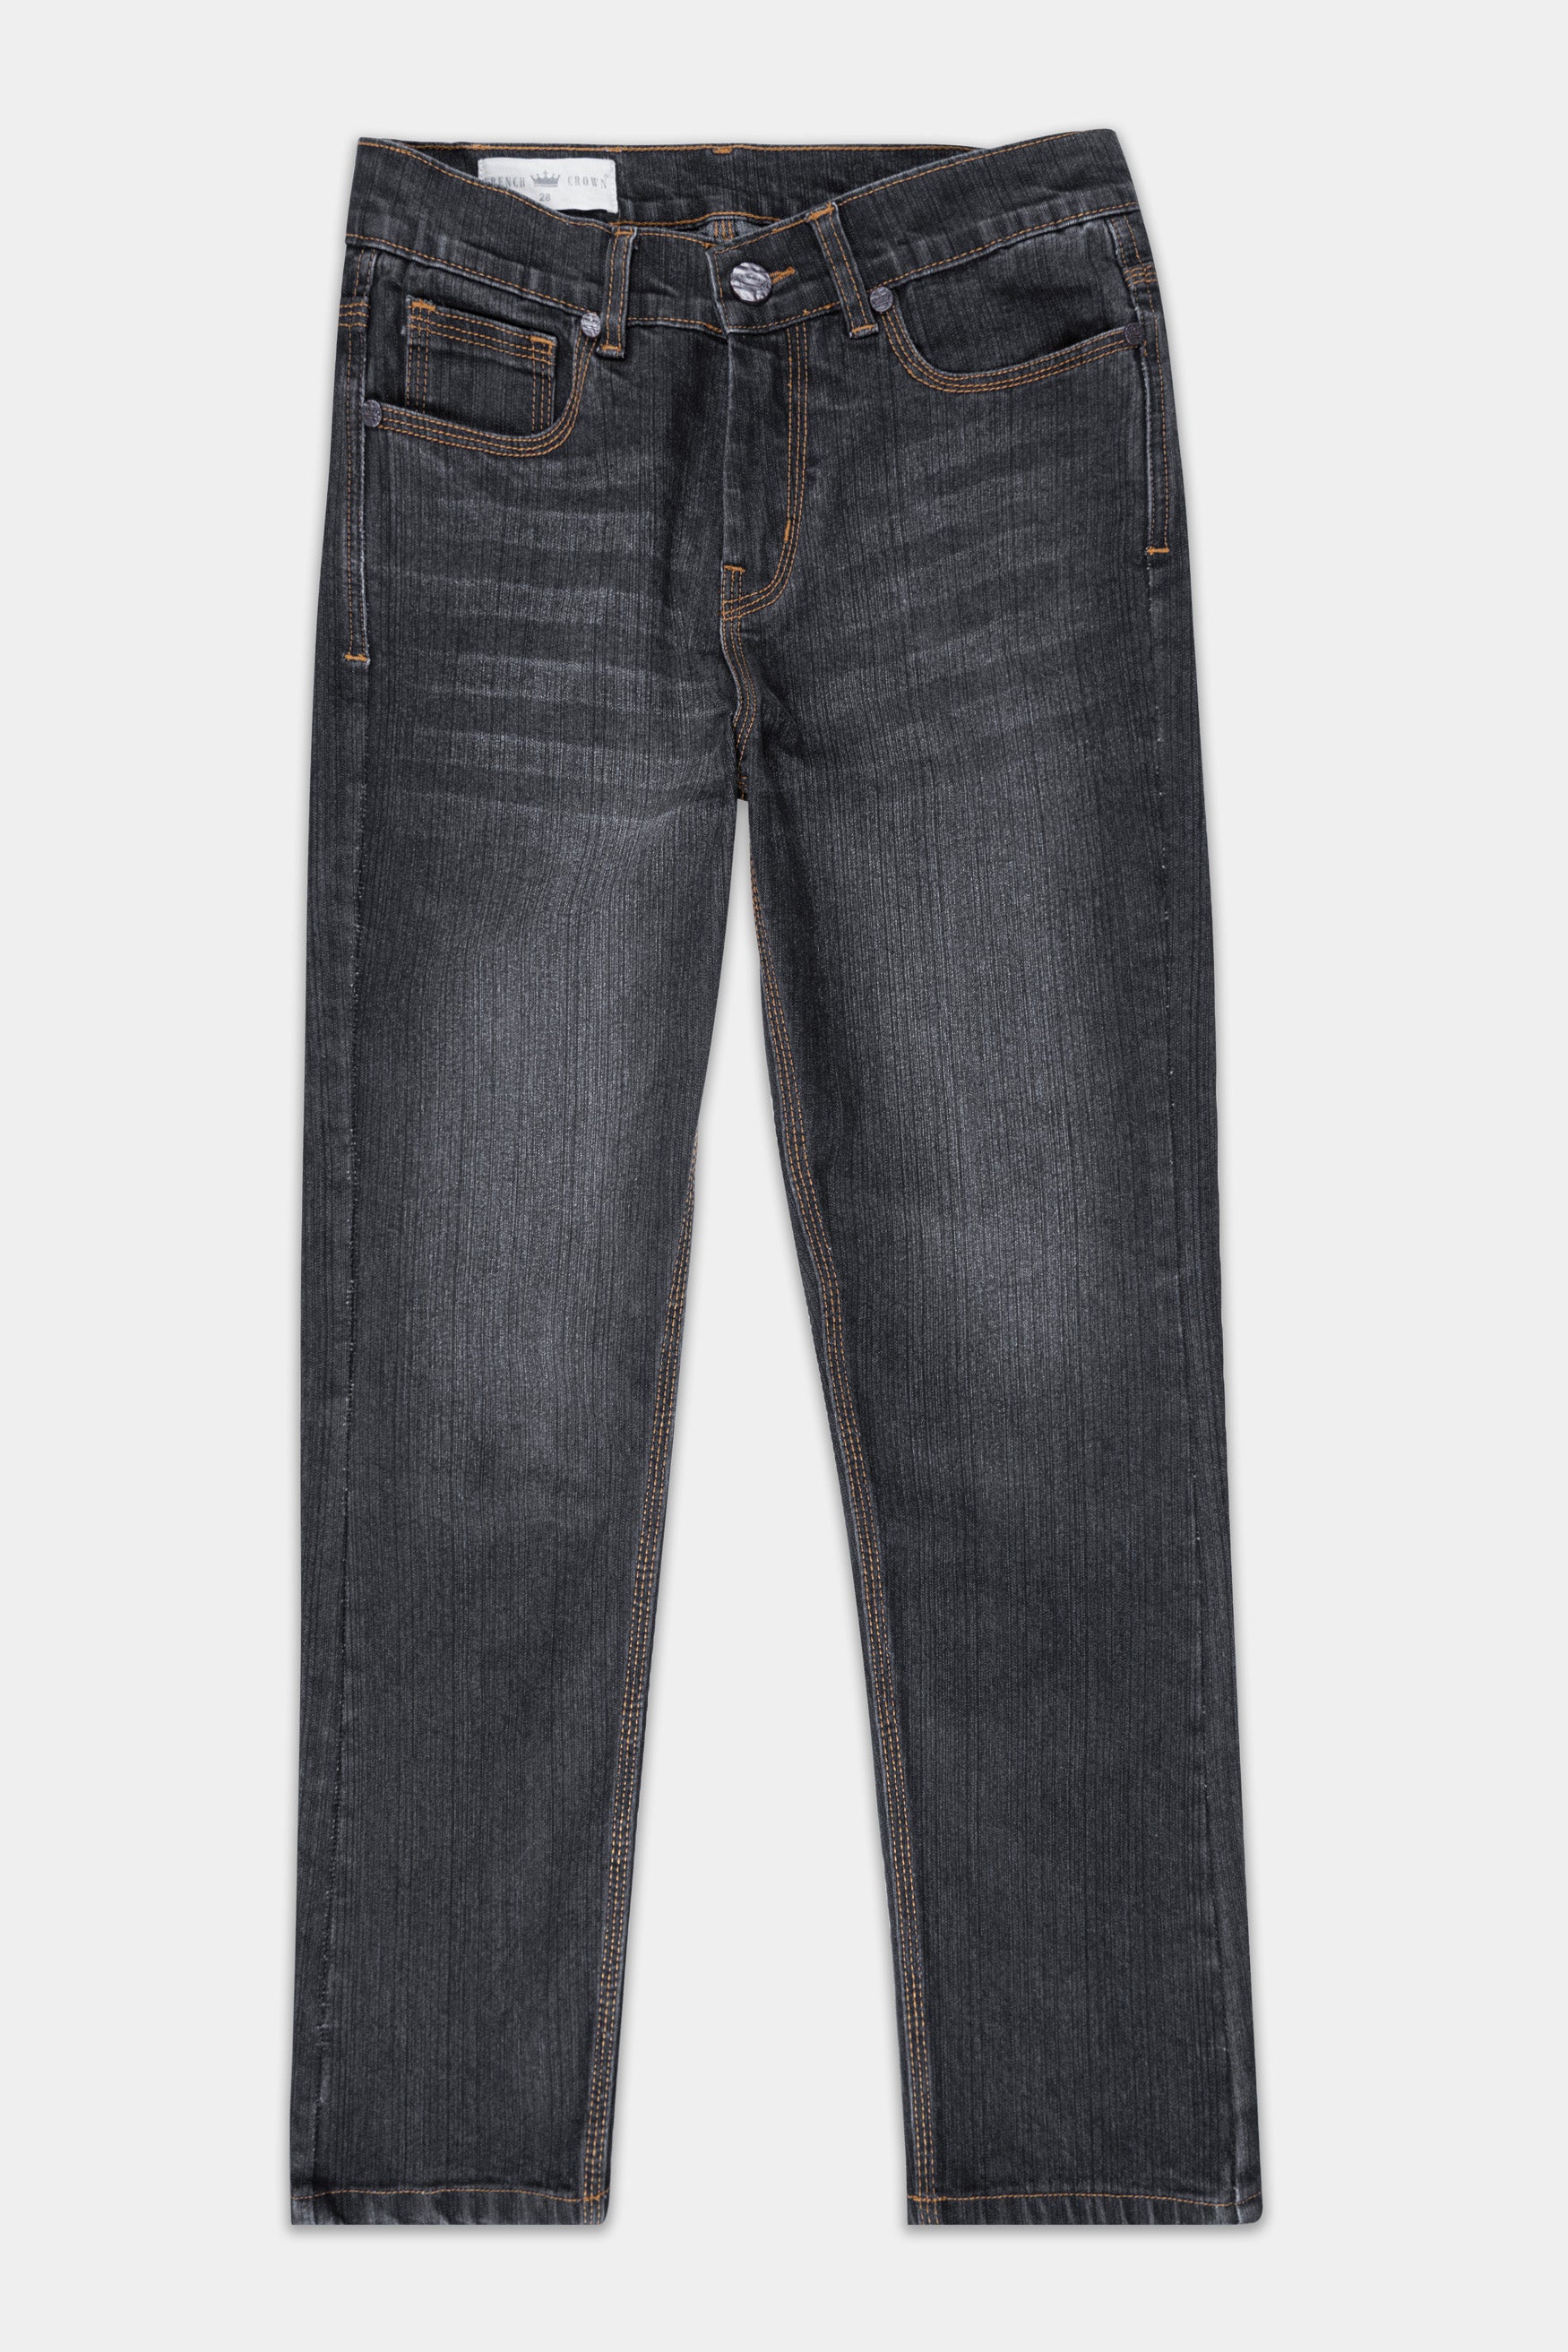 Flying Monkey Jeans Dark Wash Skinny Jeans – Glik's